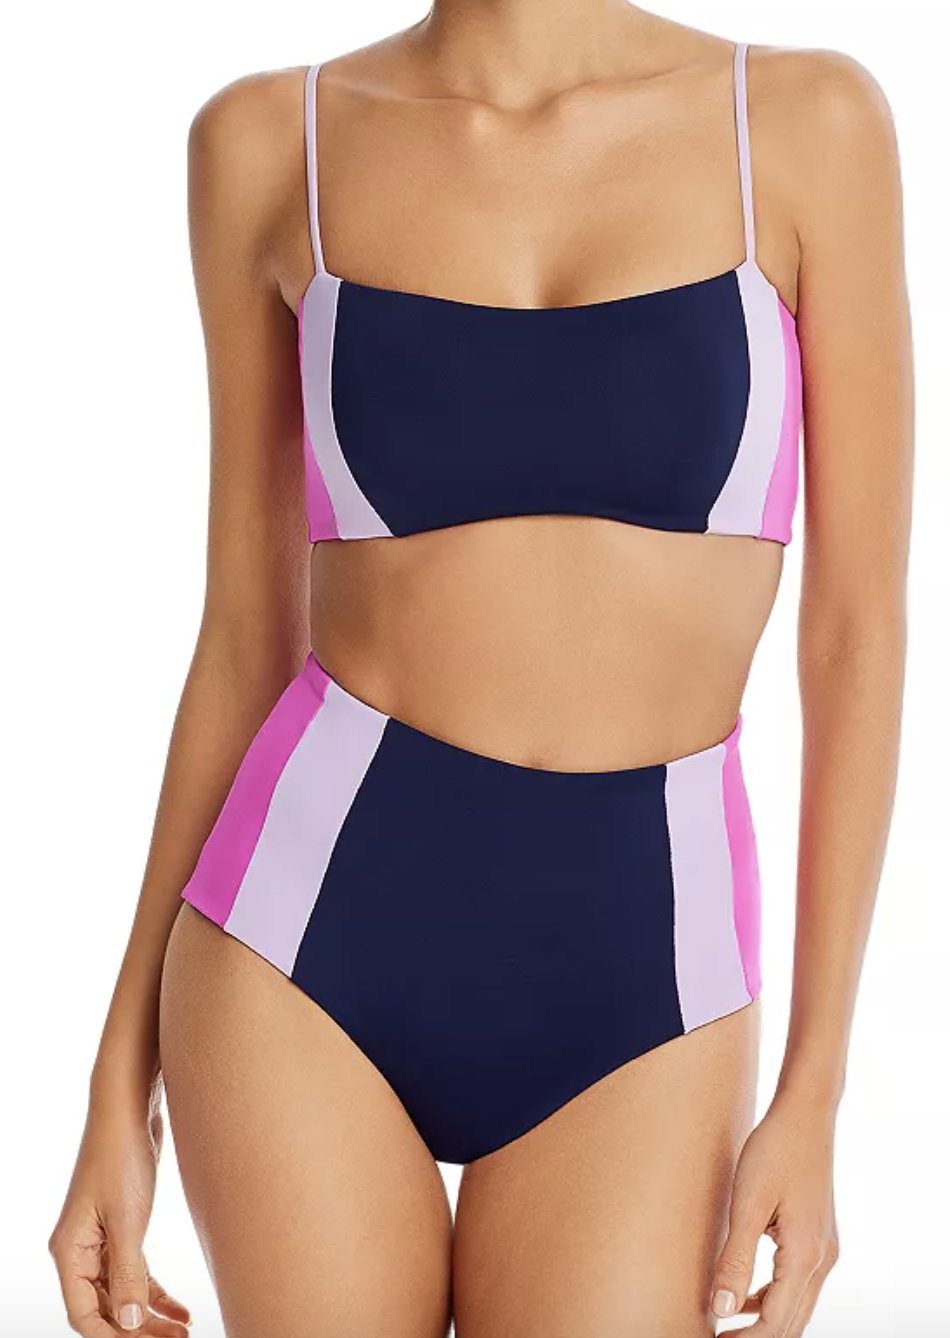 Amazon Com Big Size Swimsuit Women One Piece Plus Size Swimwear One Piece Bathing Suits Large Bust Swimsuits Clothing